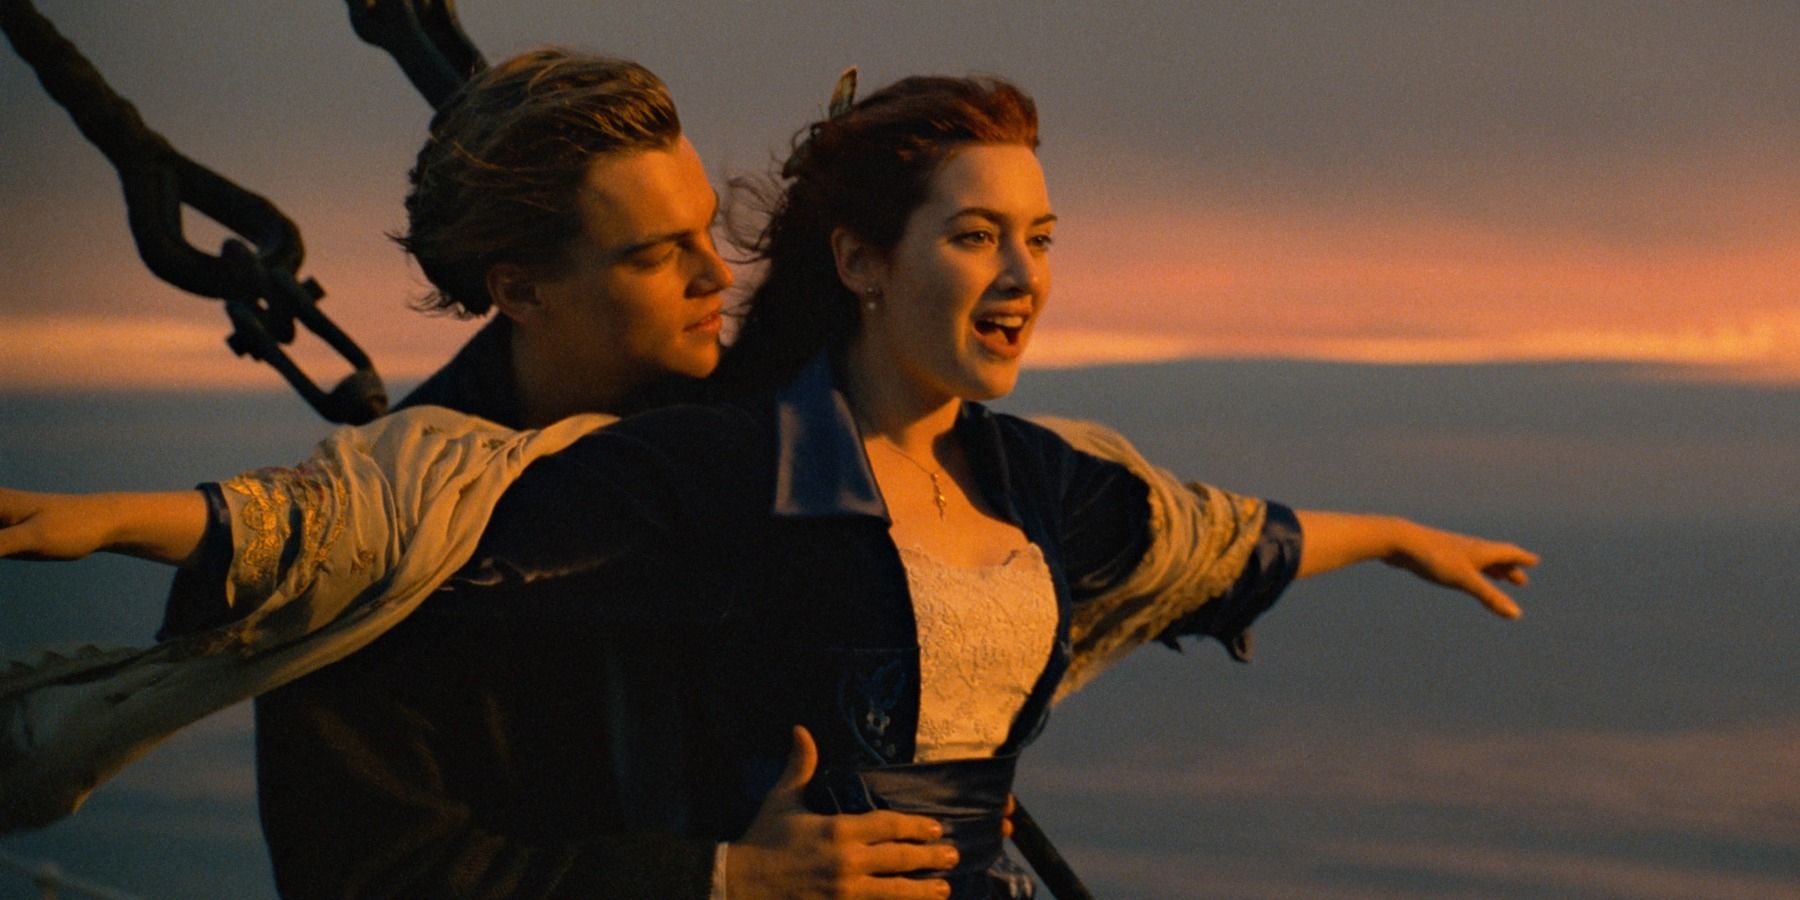 Leonardo DiCaprio as Jack holding Kate Winslet as Rose in Titanic iconic scene